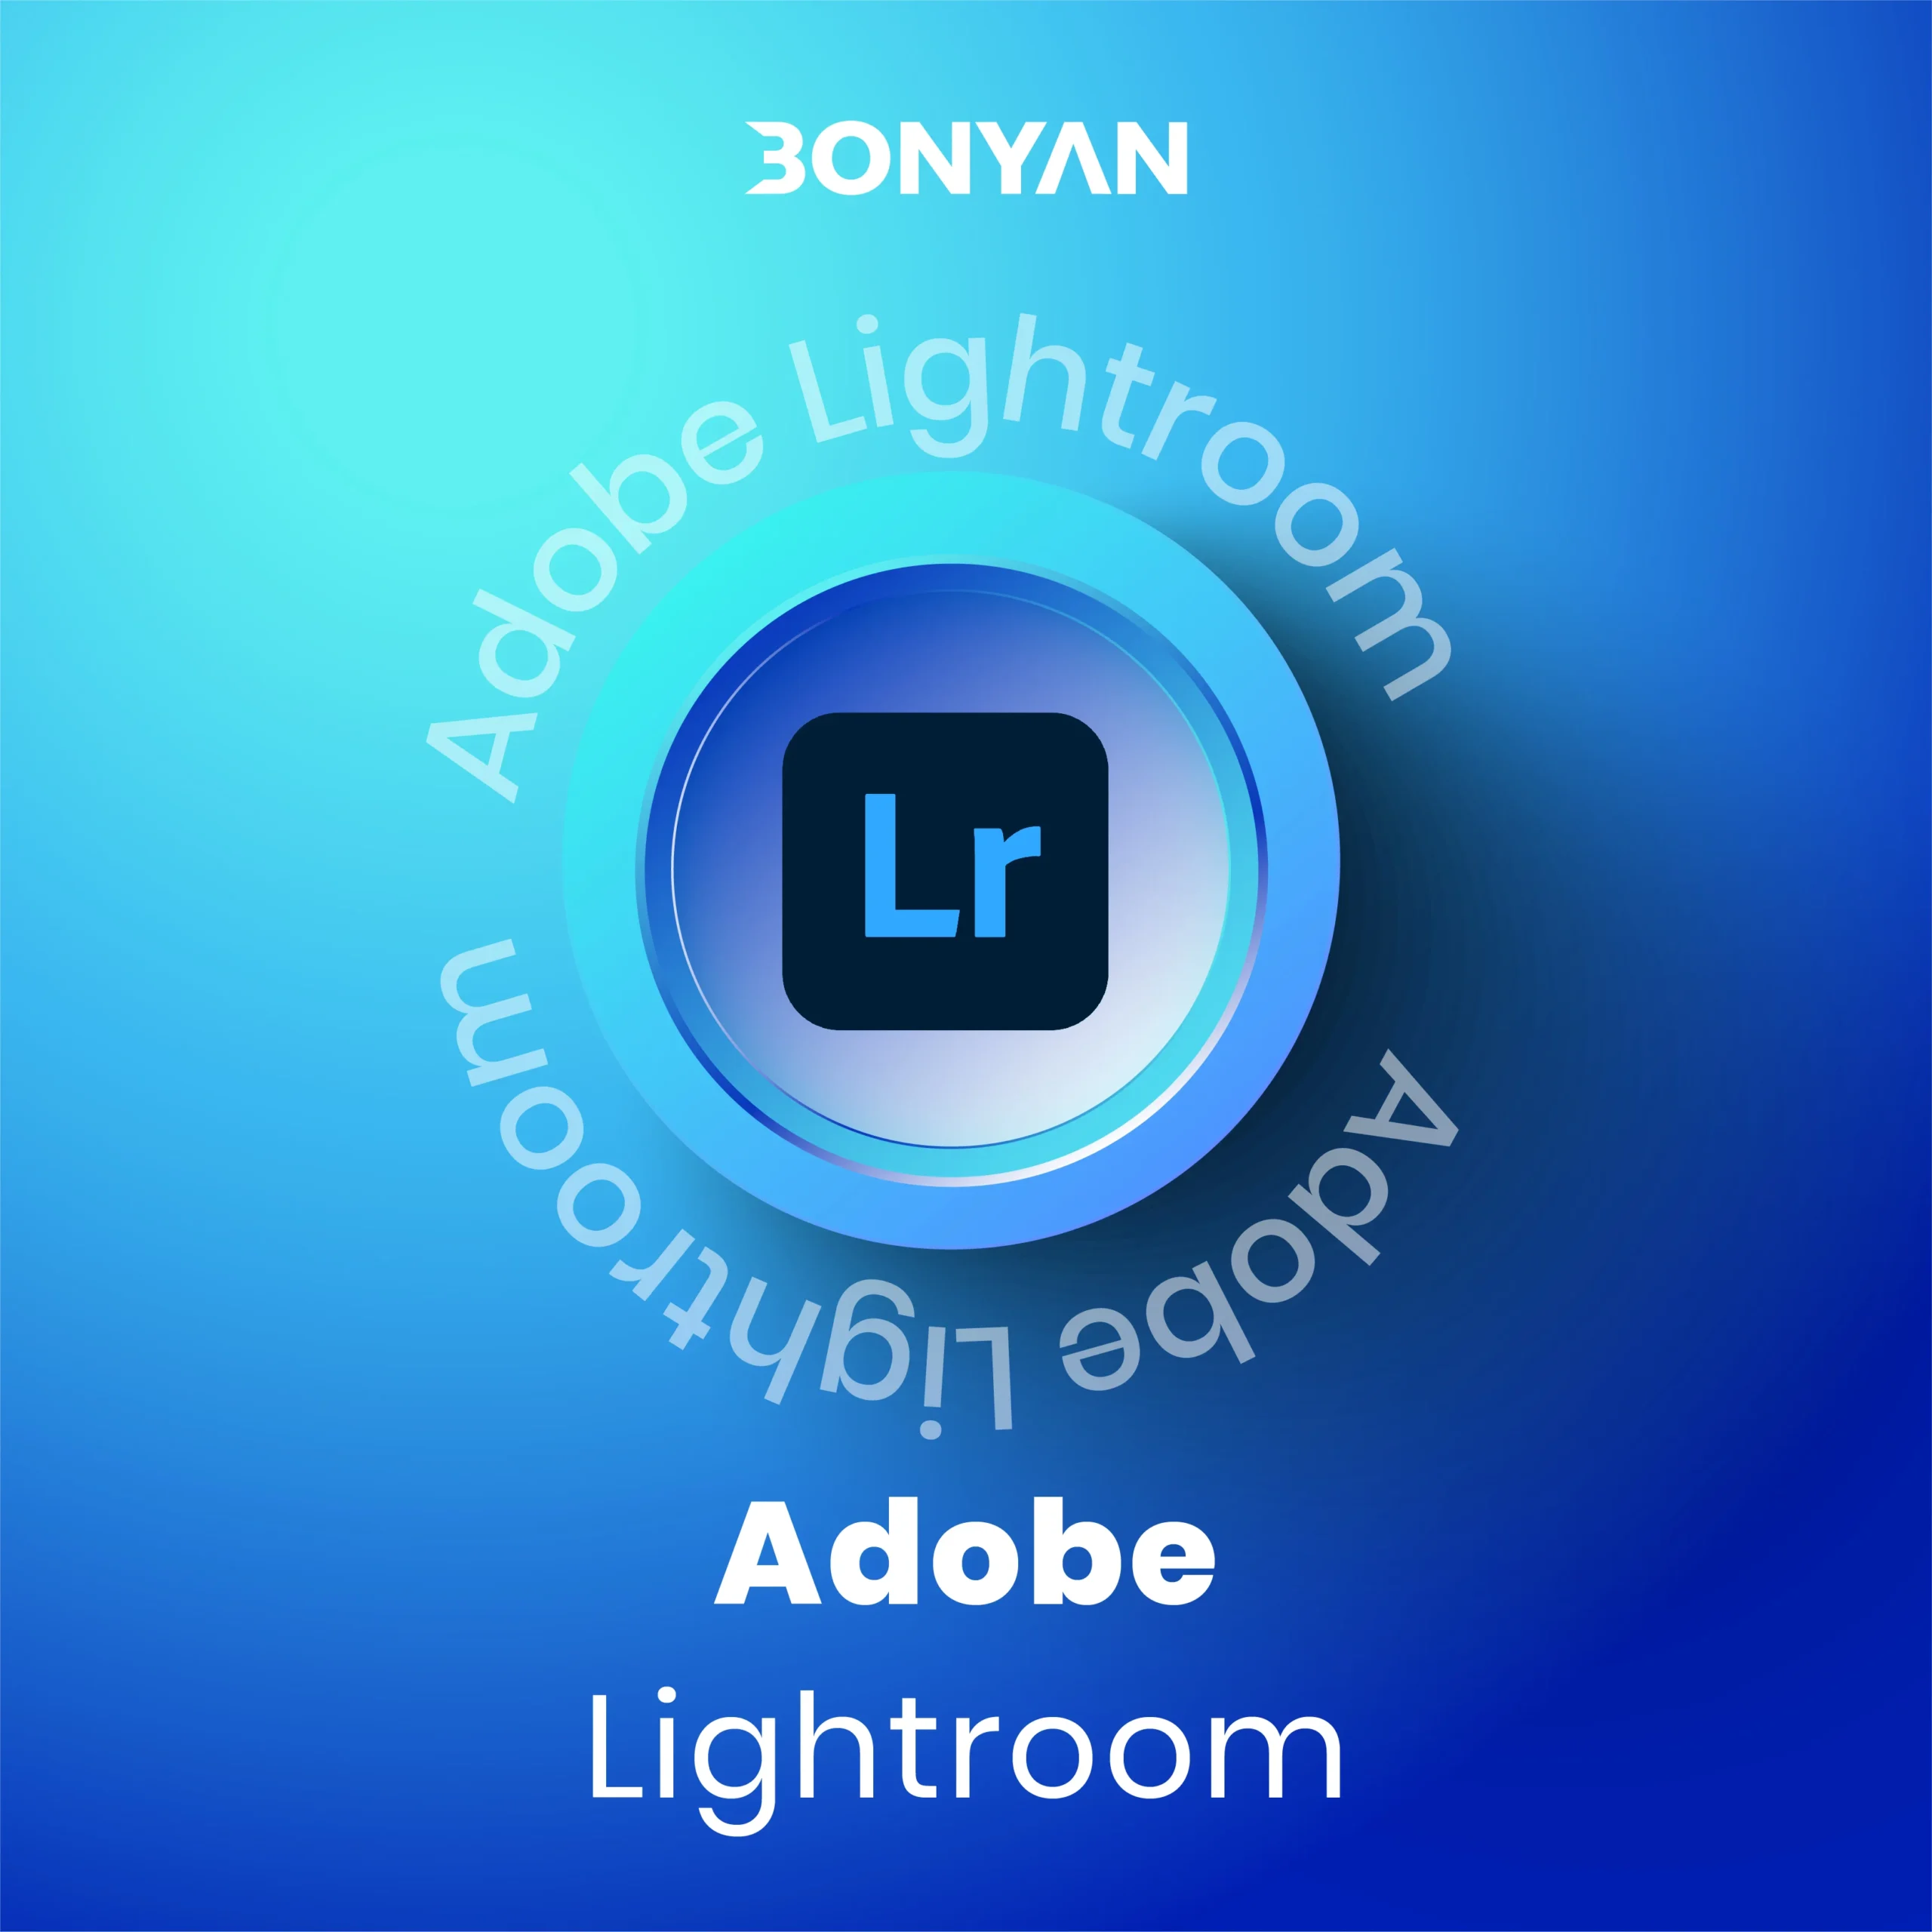 Adobe-Lightroom